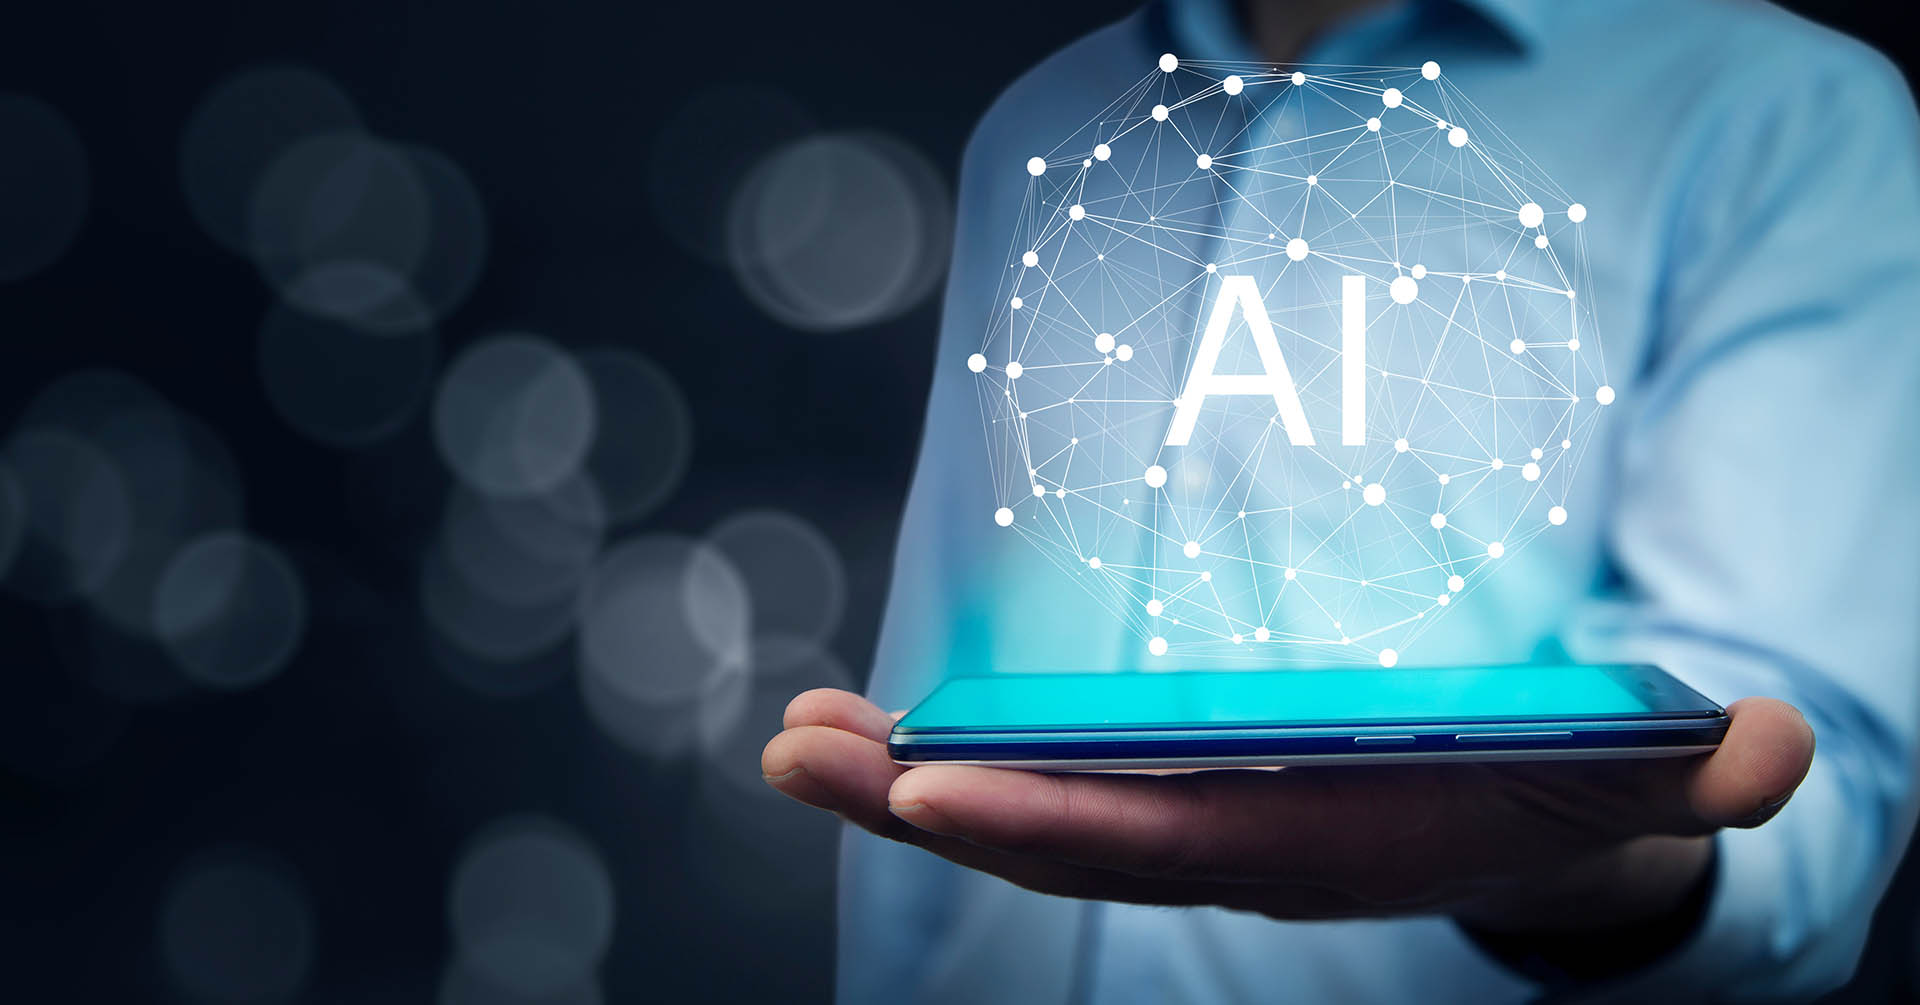 Intelligenza artificiale, tra rischi e potenzialità